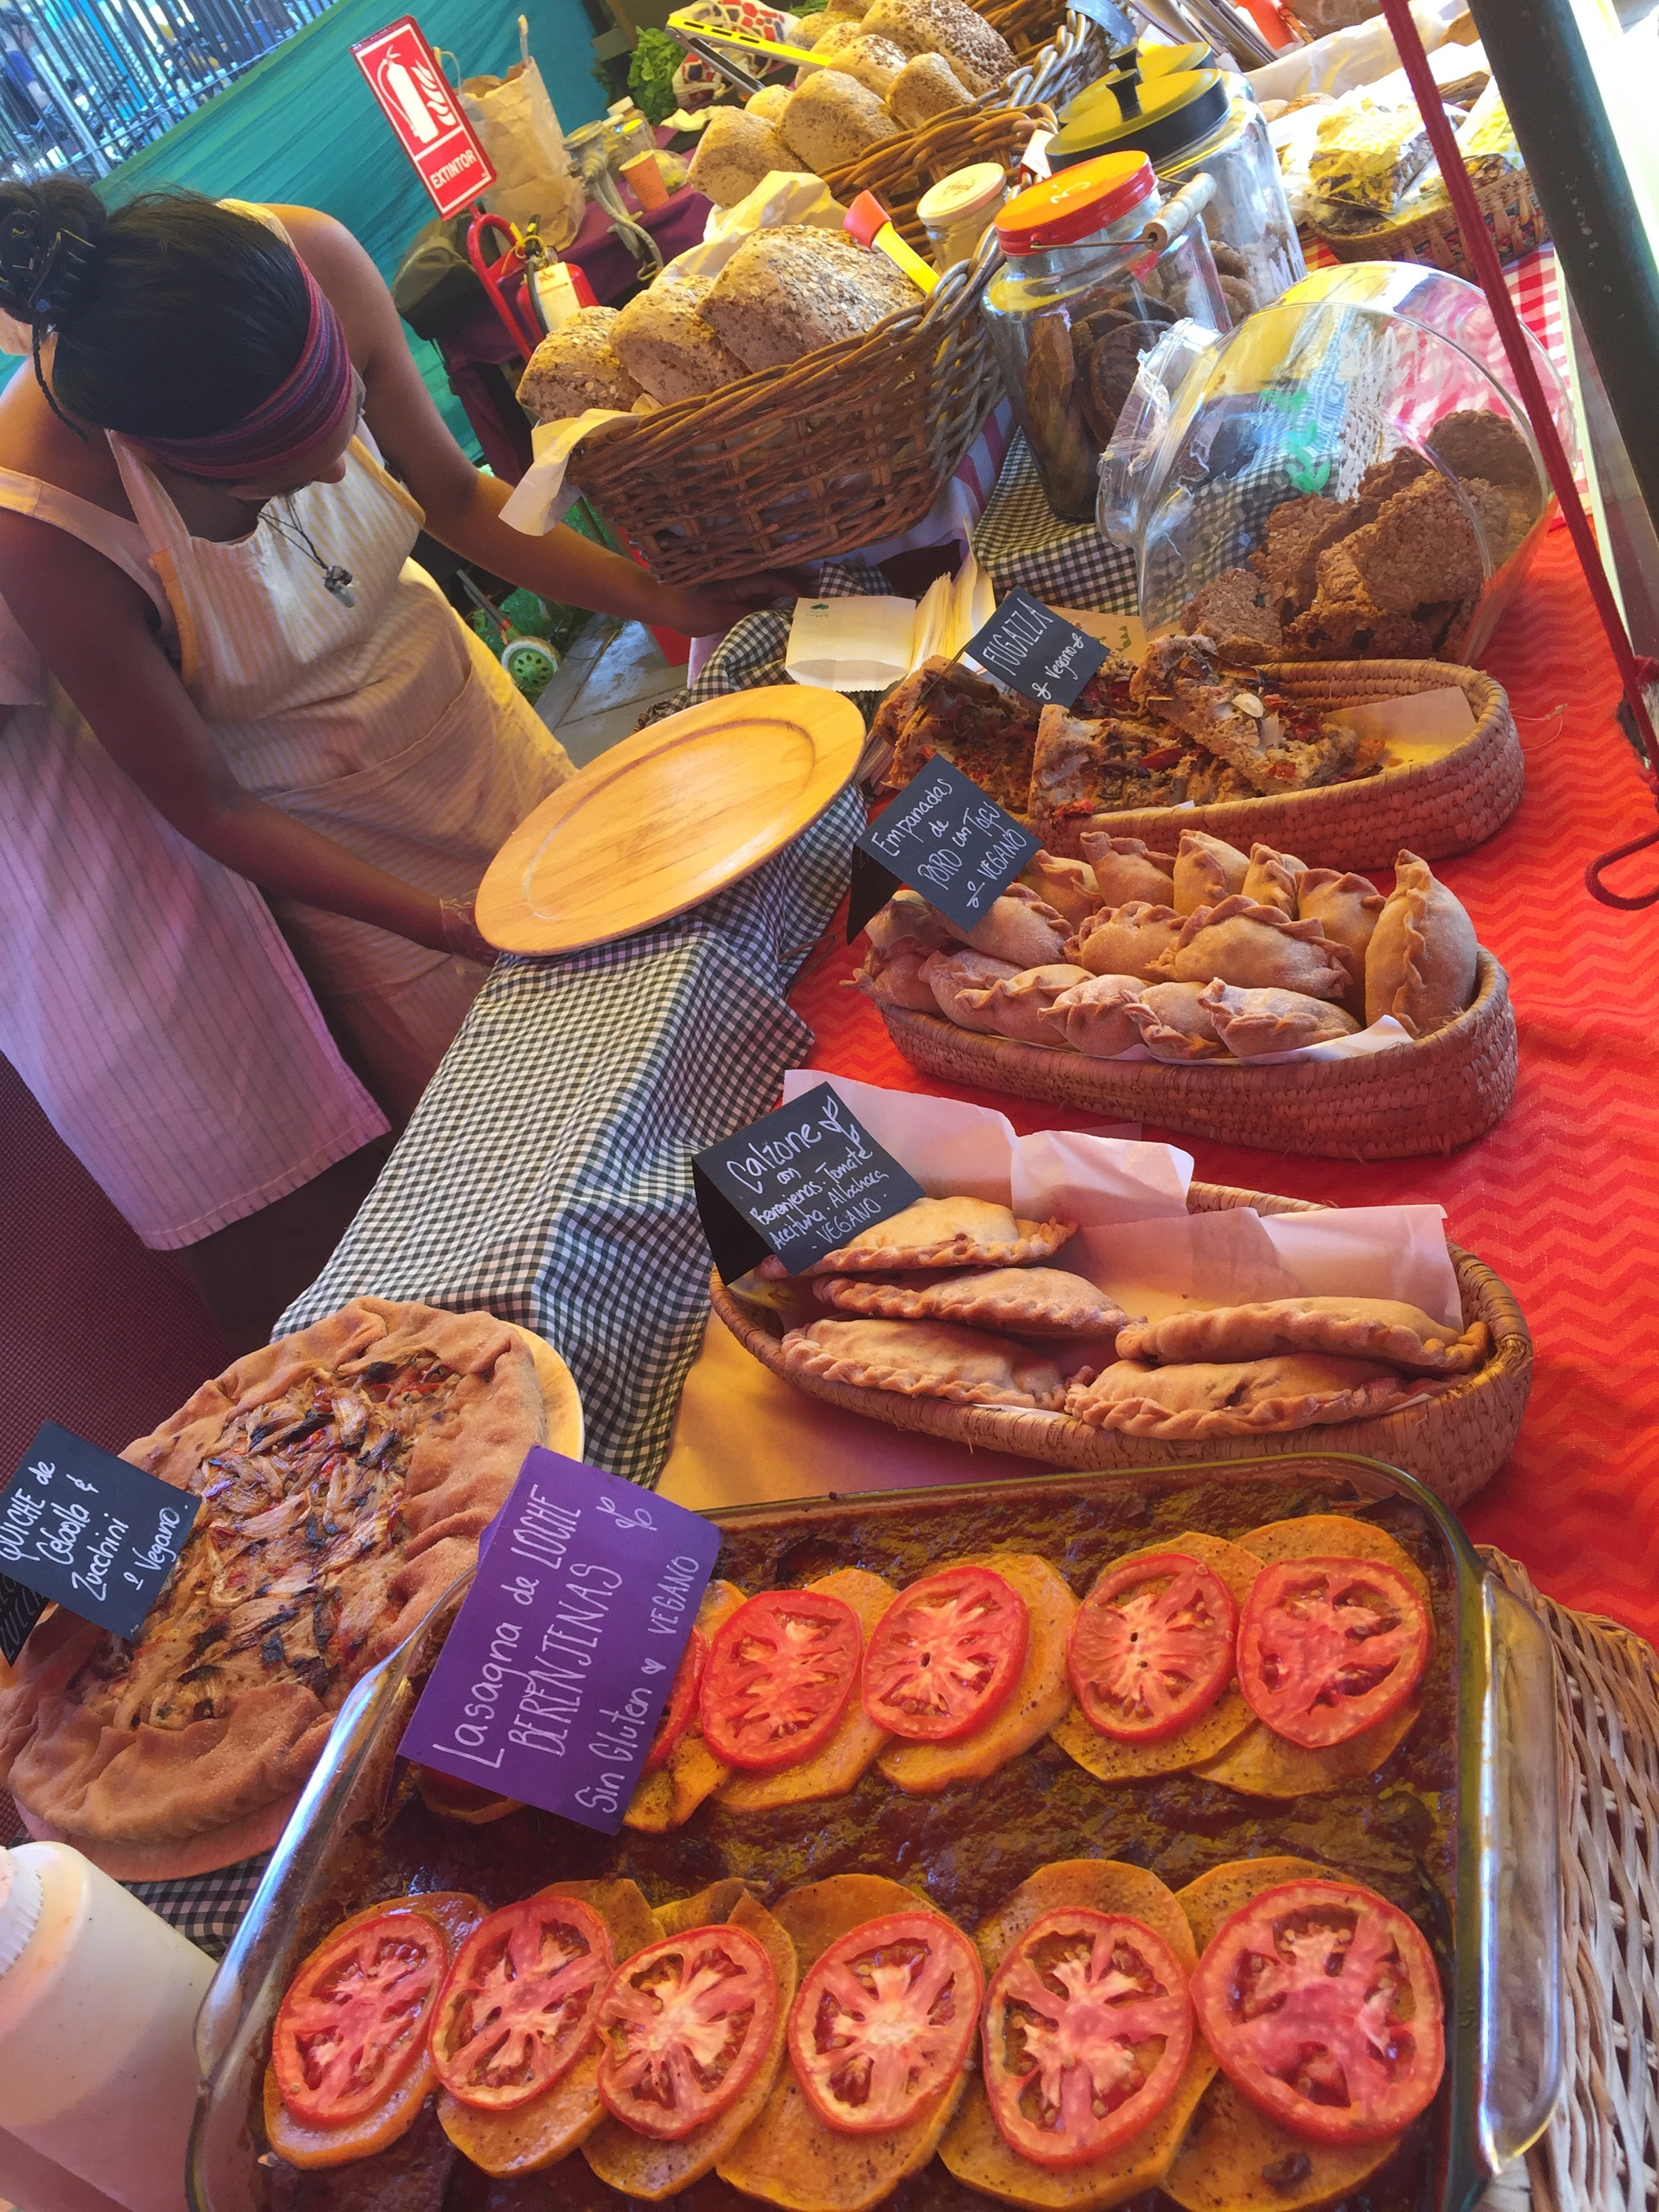  Vegan bakery stand at the Bioferia organic market in Miraflores district. 